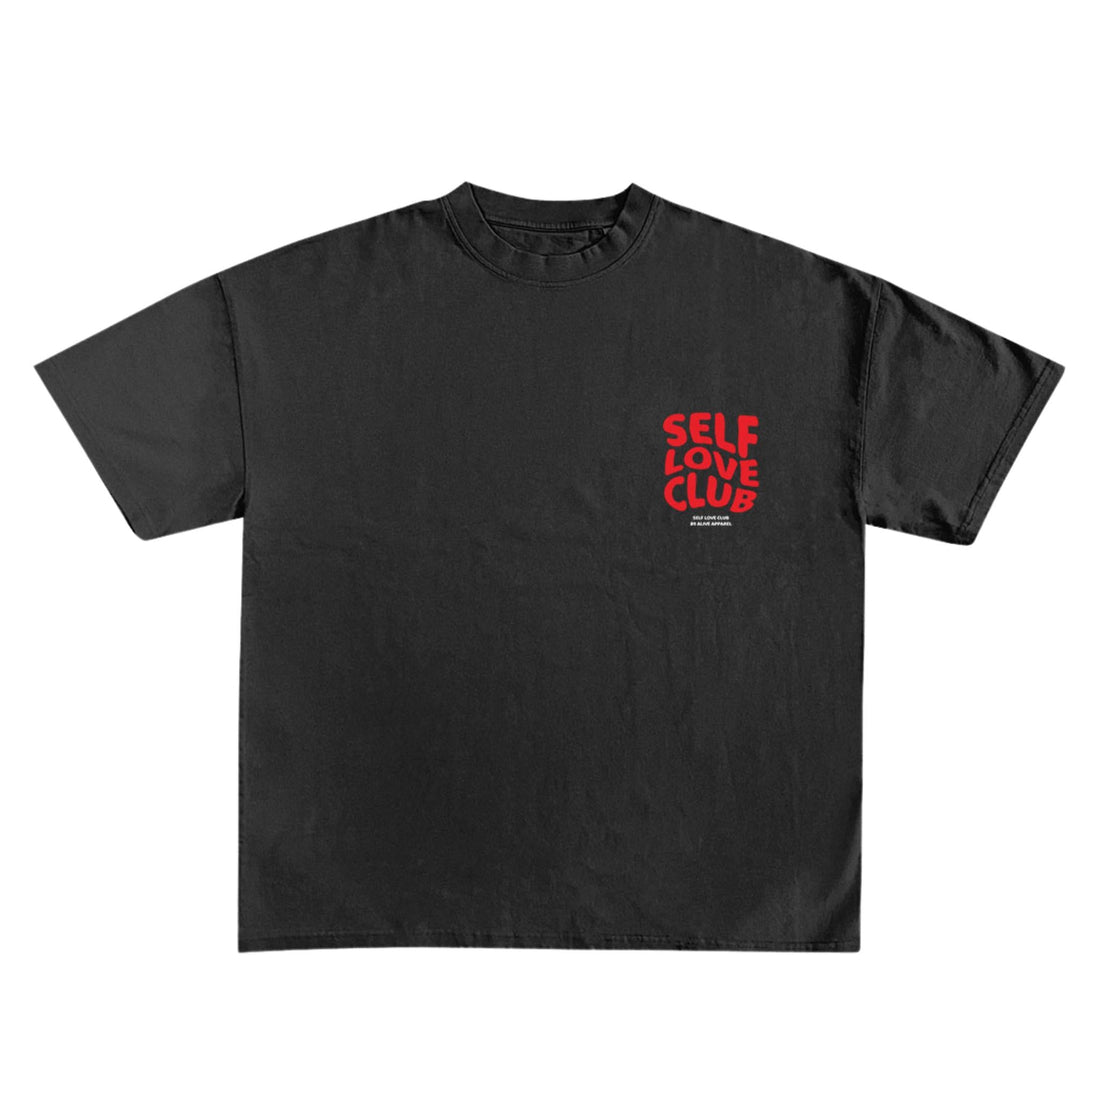 Self Love Club - Black/Red